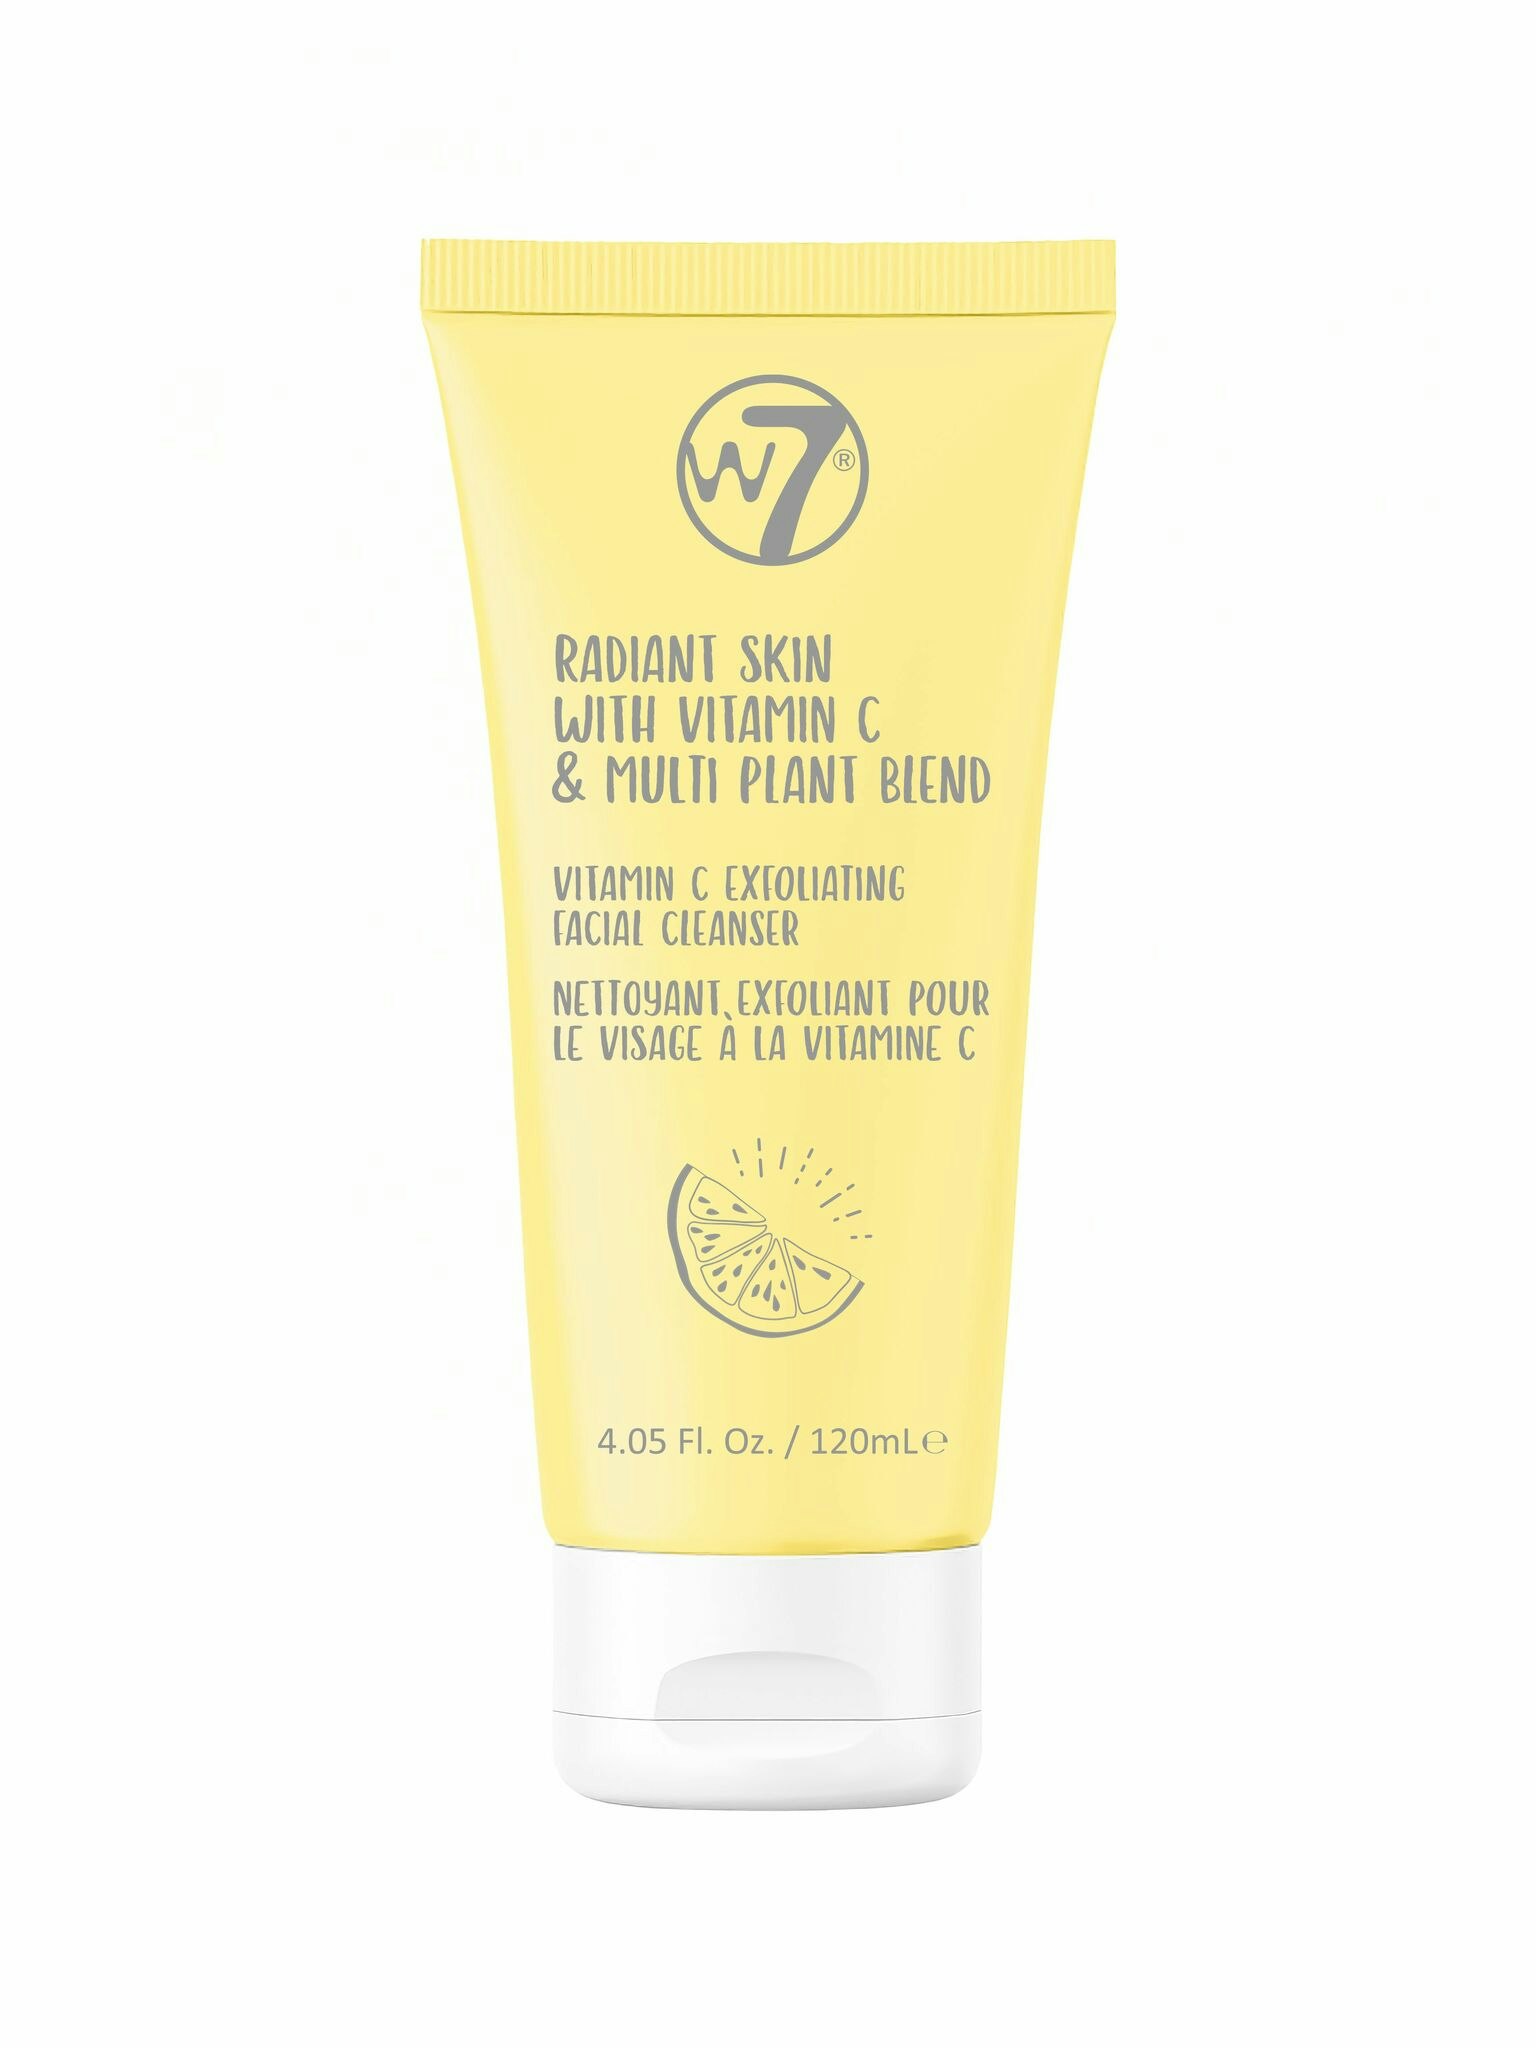 W7 Radient Skin With Vitamin C & Multi Plant Blend - Vitamin C Exfoliating Facial Cleanser